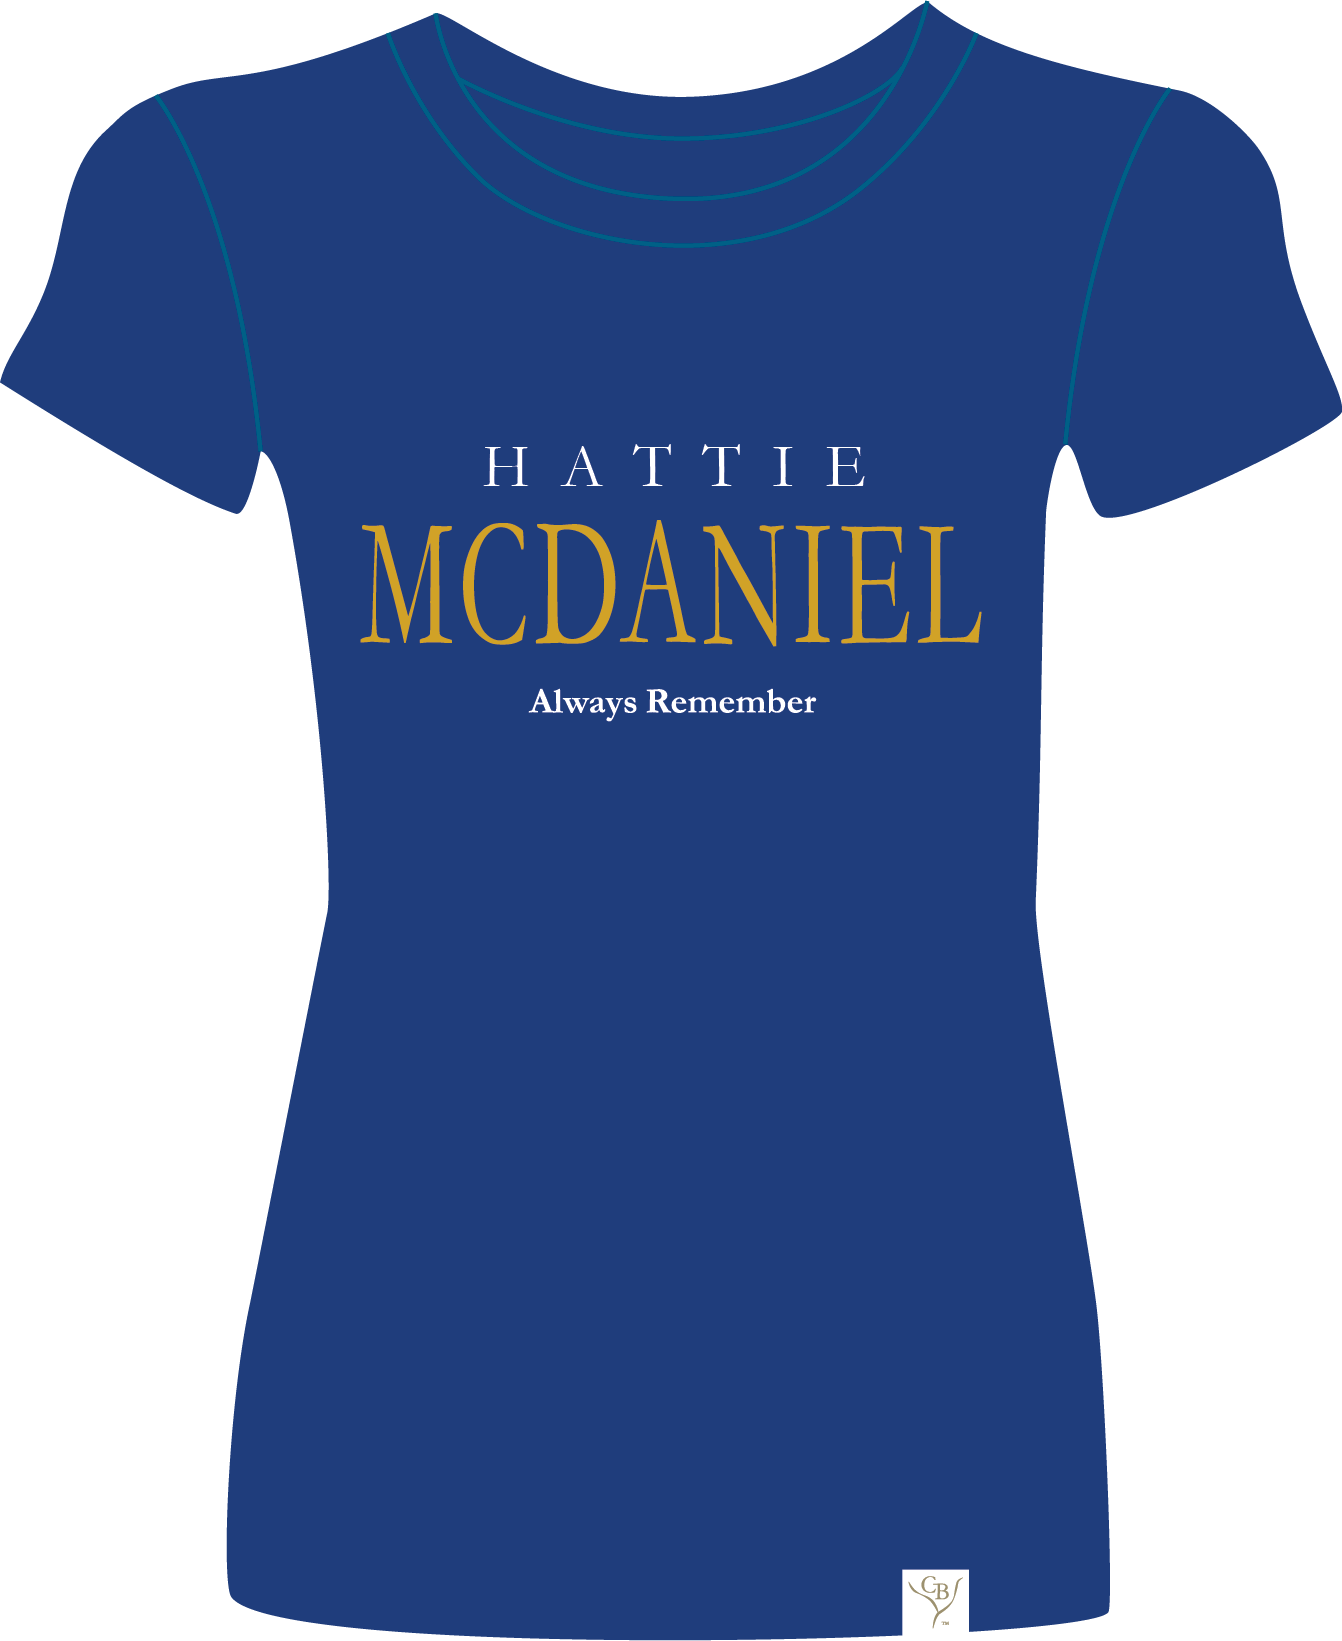 The Hattie 9